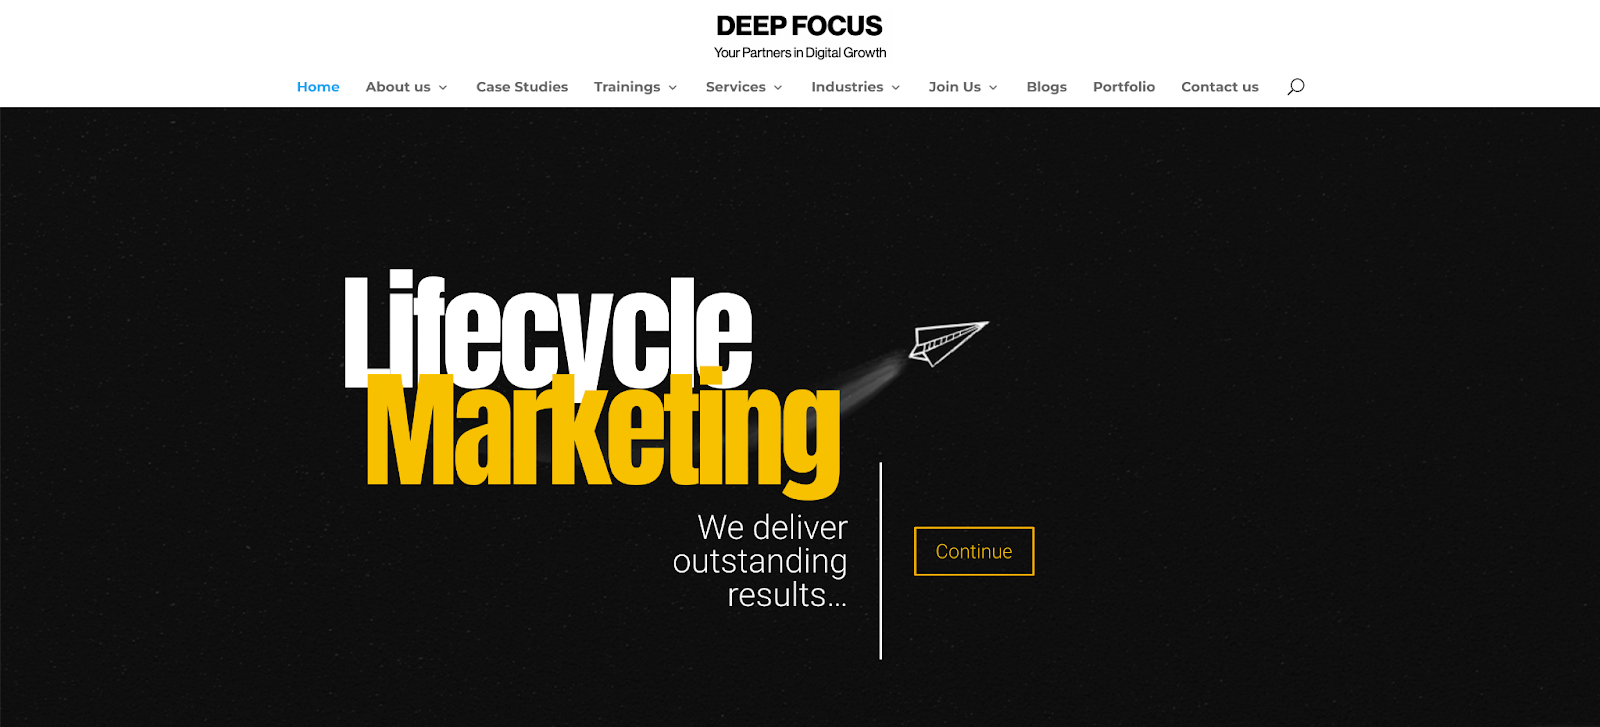 Deep focus website